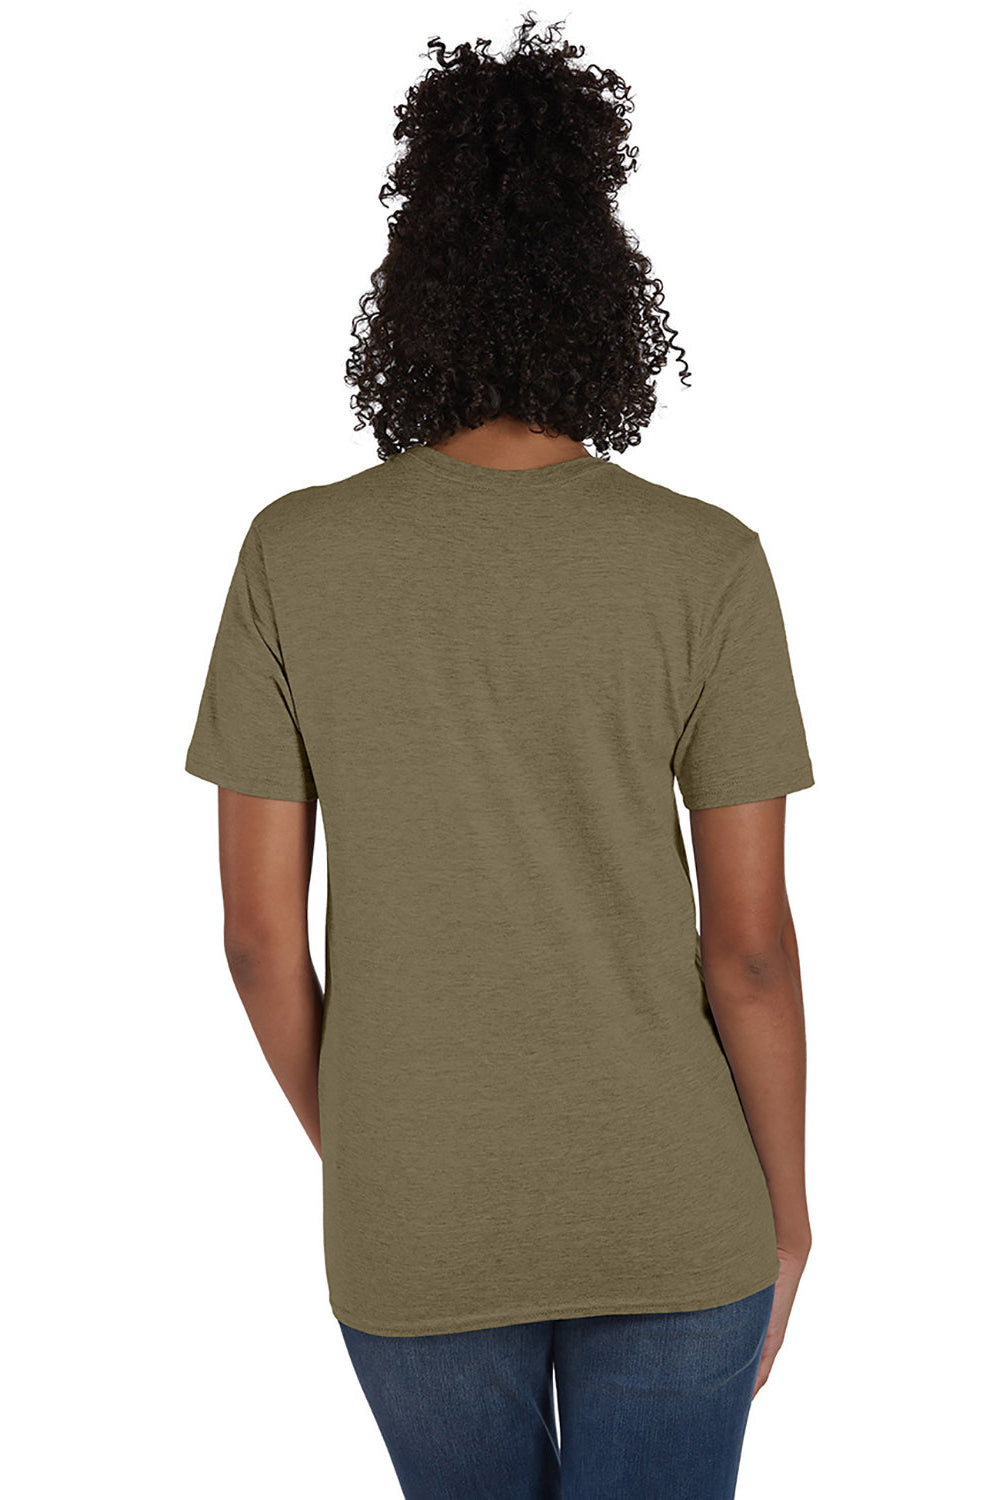 Hanes 4980 Mens Nano-T Short Sleeve Crewneck T-Shirt Heather Oregano Back